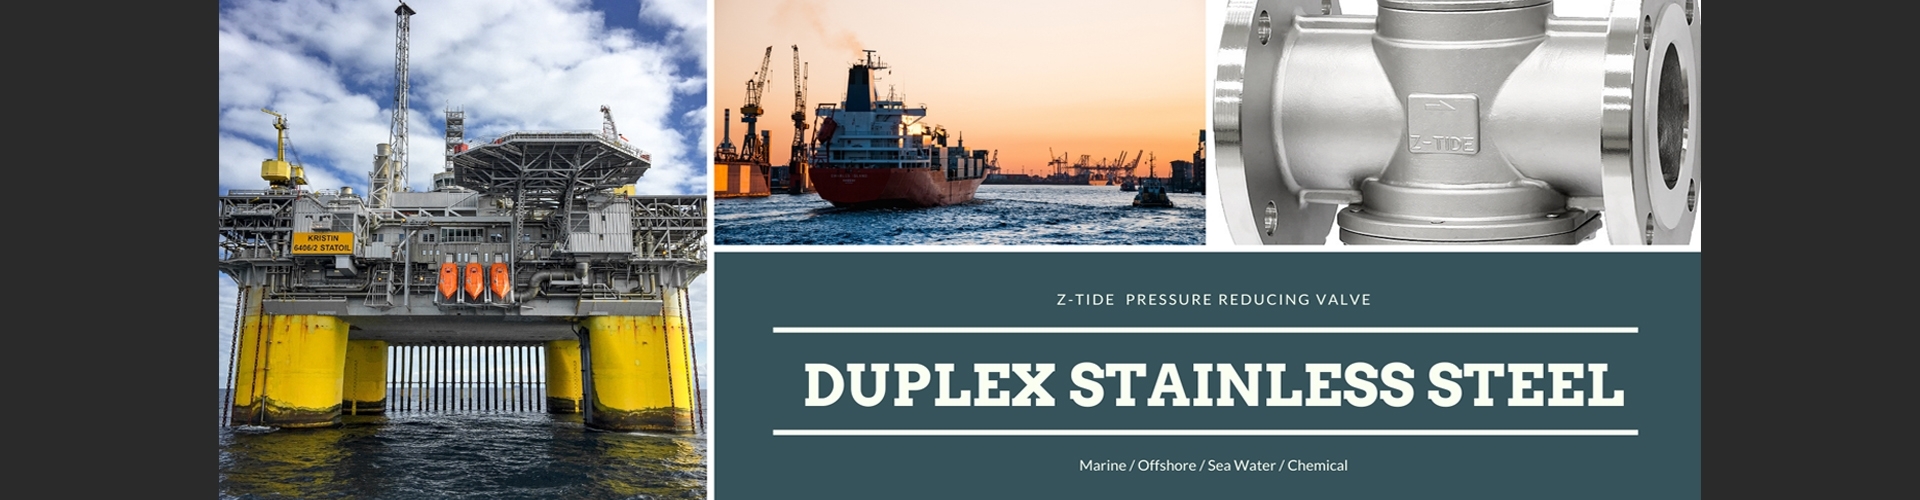 Duplex SS Marine Offshore Pressure Regulator